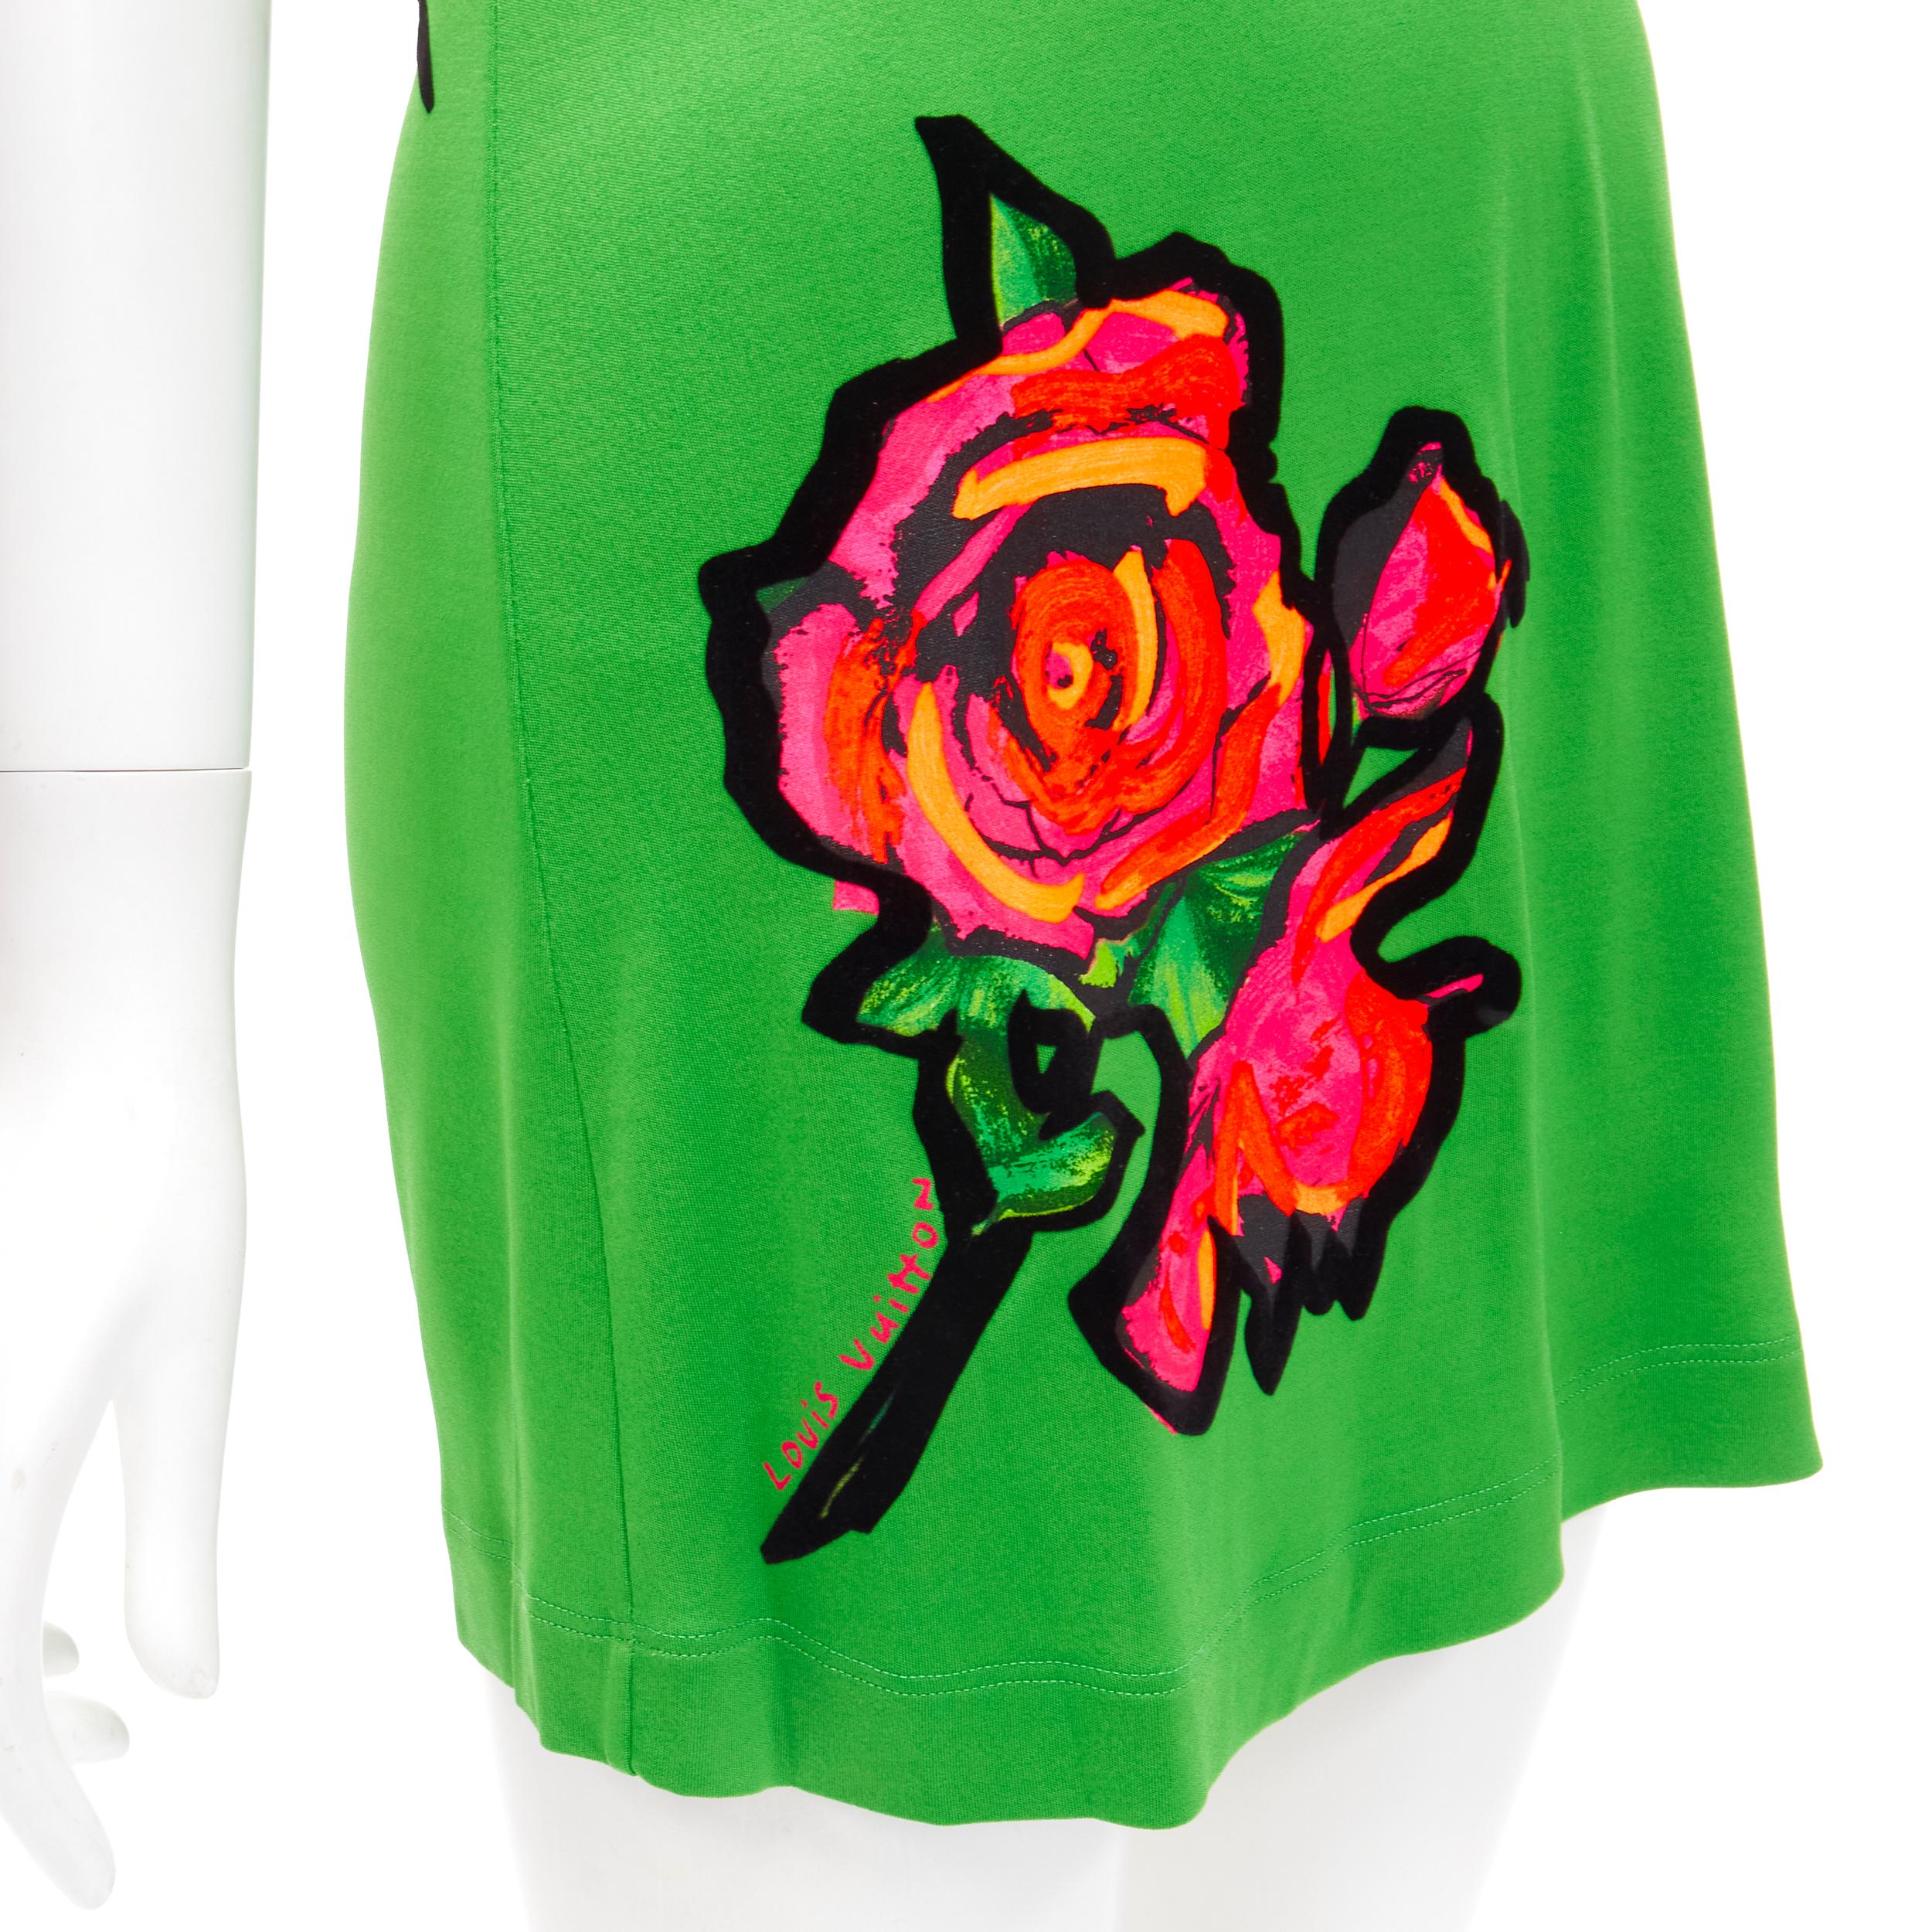 LOUIS VUITTON Stephen Sprouse Neon pink Graffiti Pop Rose green mini dress S For Sale 1